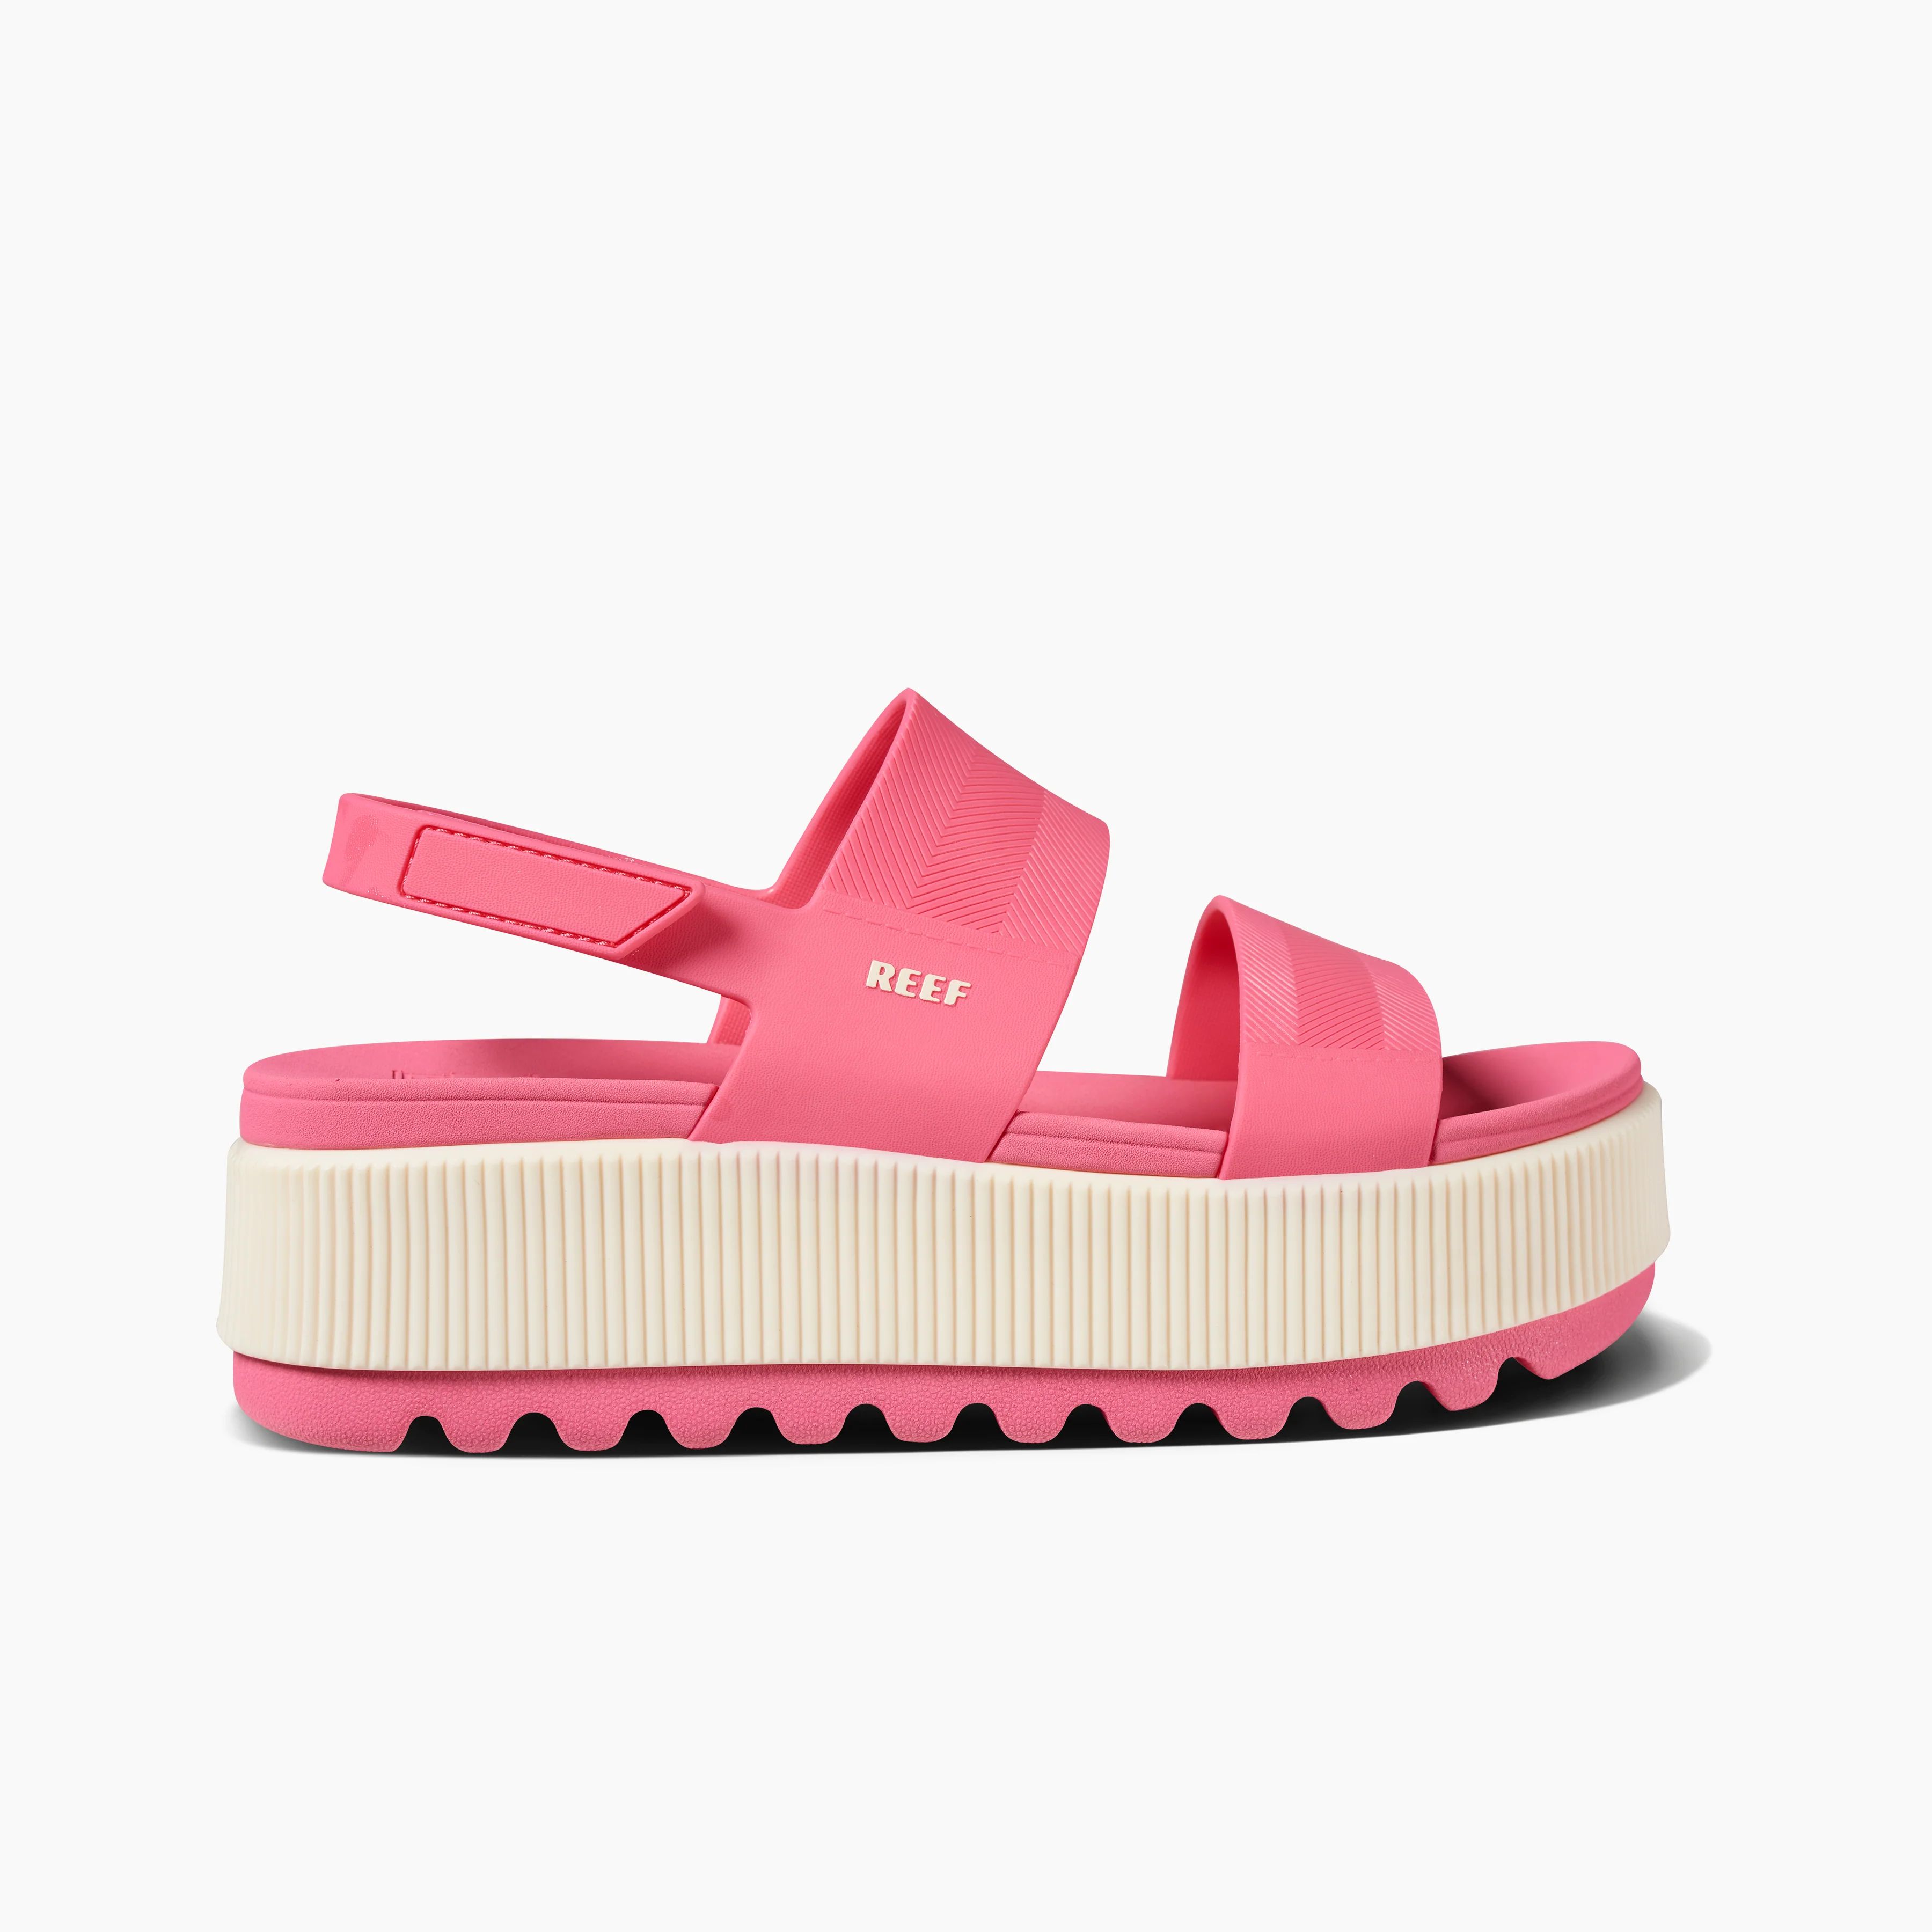 Water Vista Higher Hot Pink Women's Sandals | REEF® | Reef